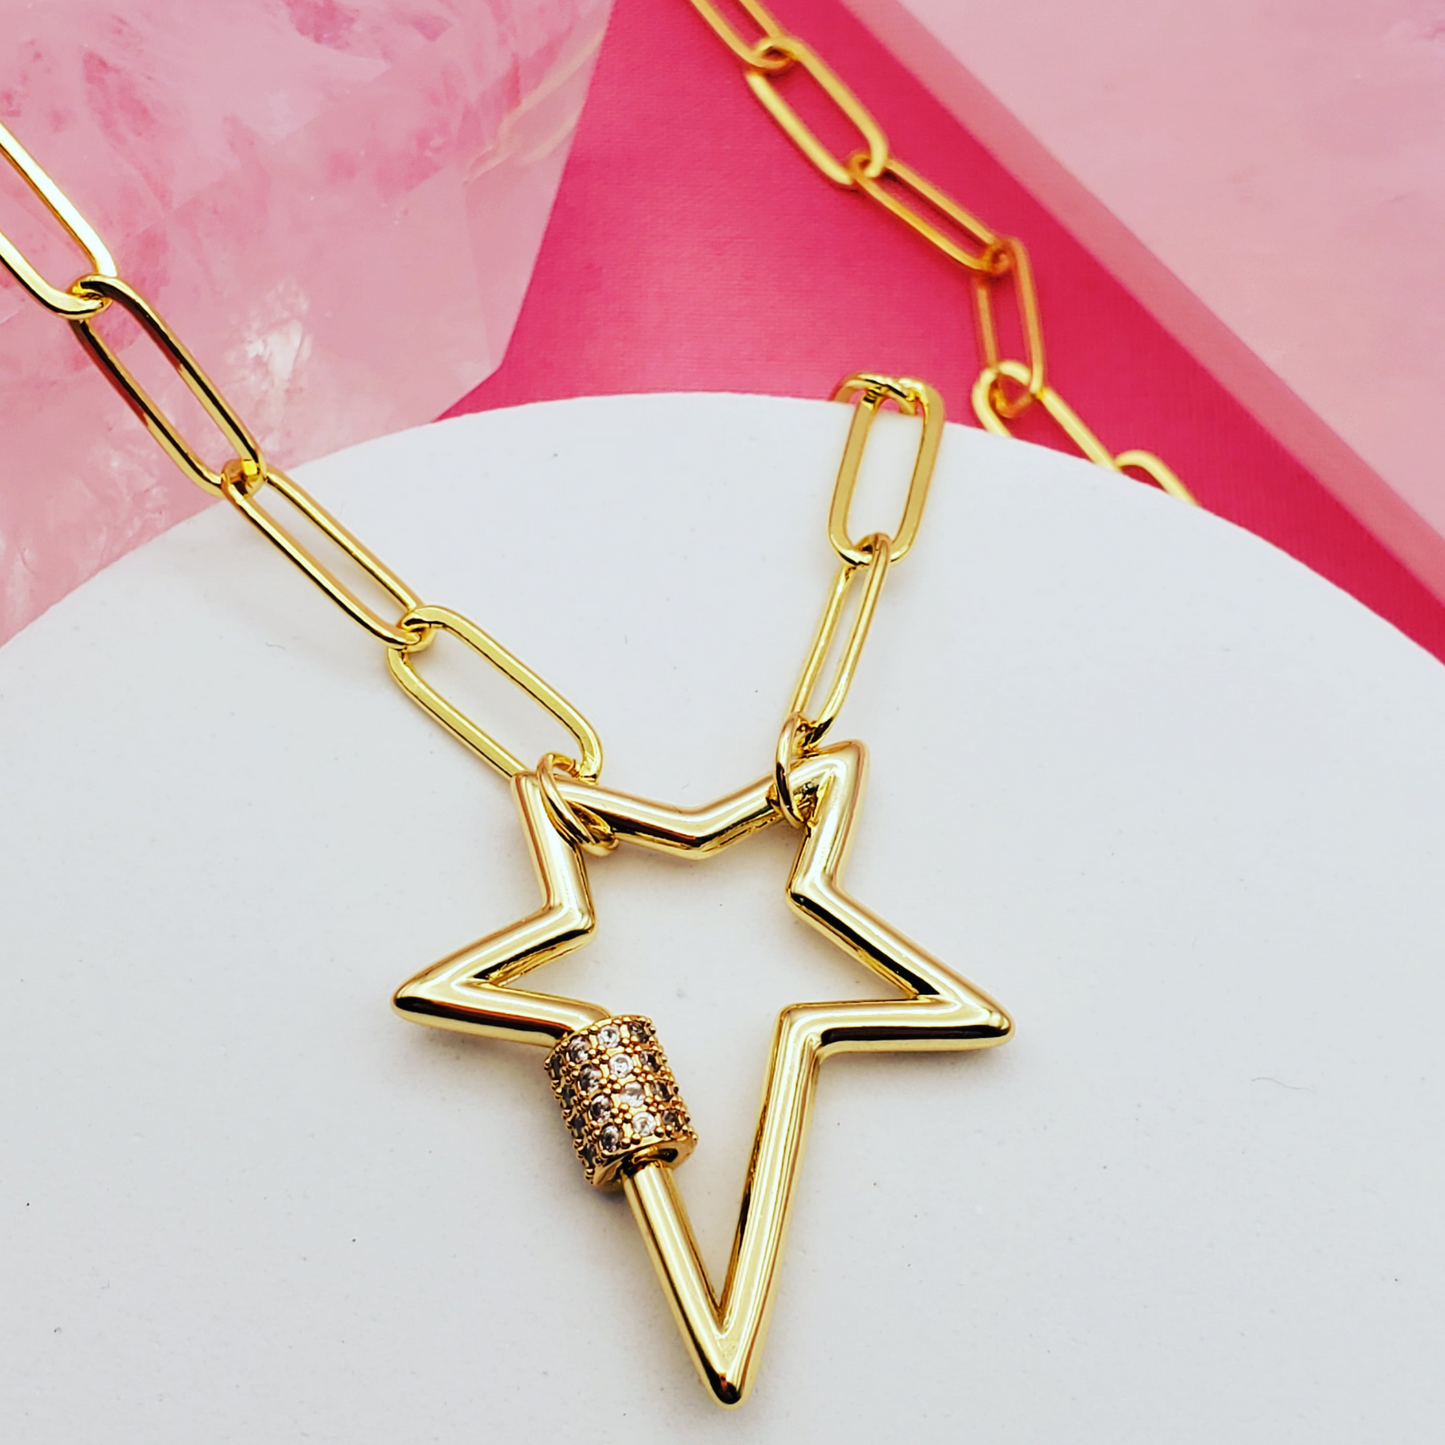 Big Star Necklace